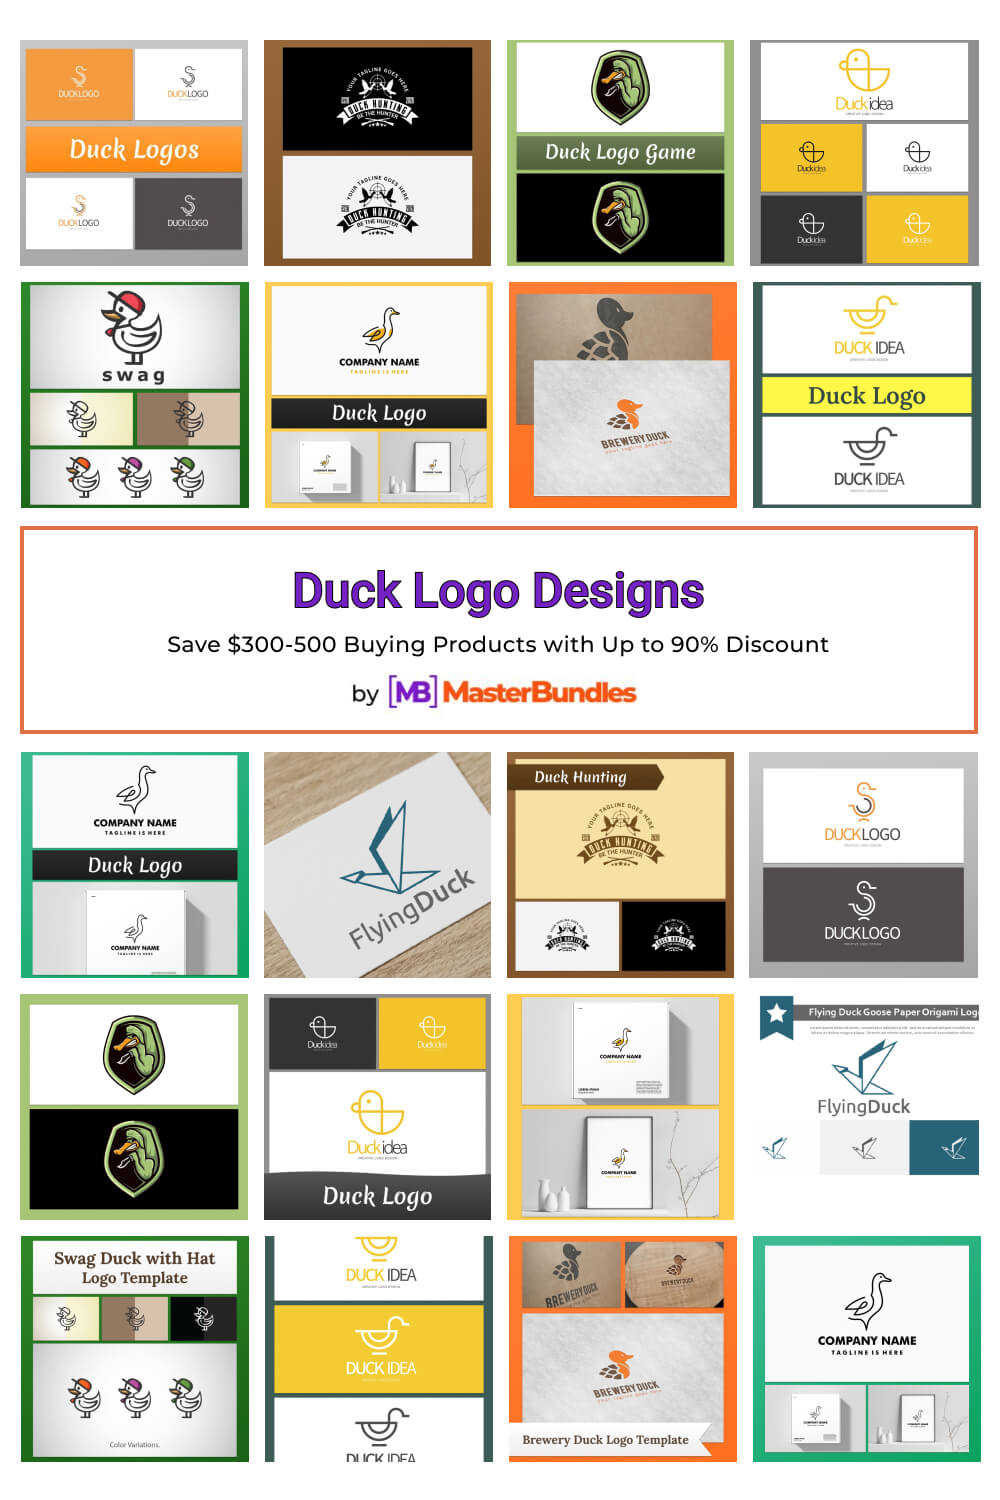 duck logo designs pinterest image.